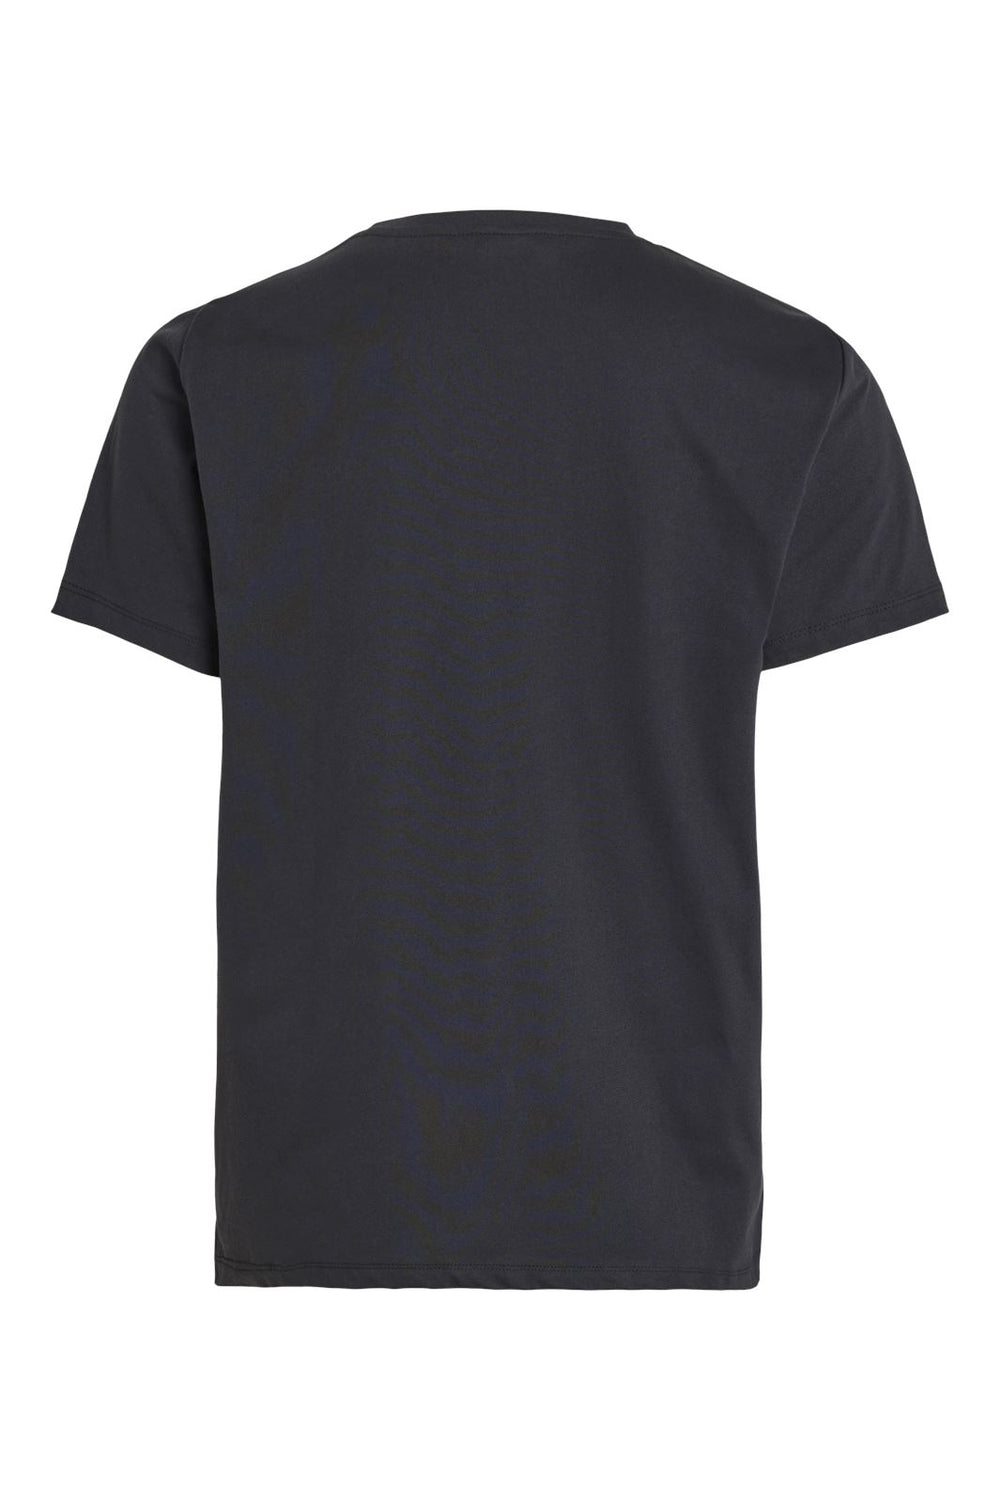 Vila - Vicolban S/S T-Shirt - 4609608 Black Gold Frontprint